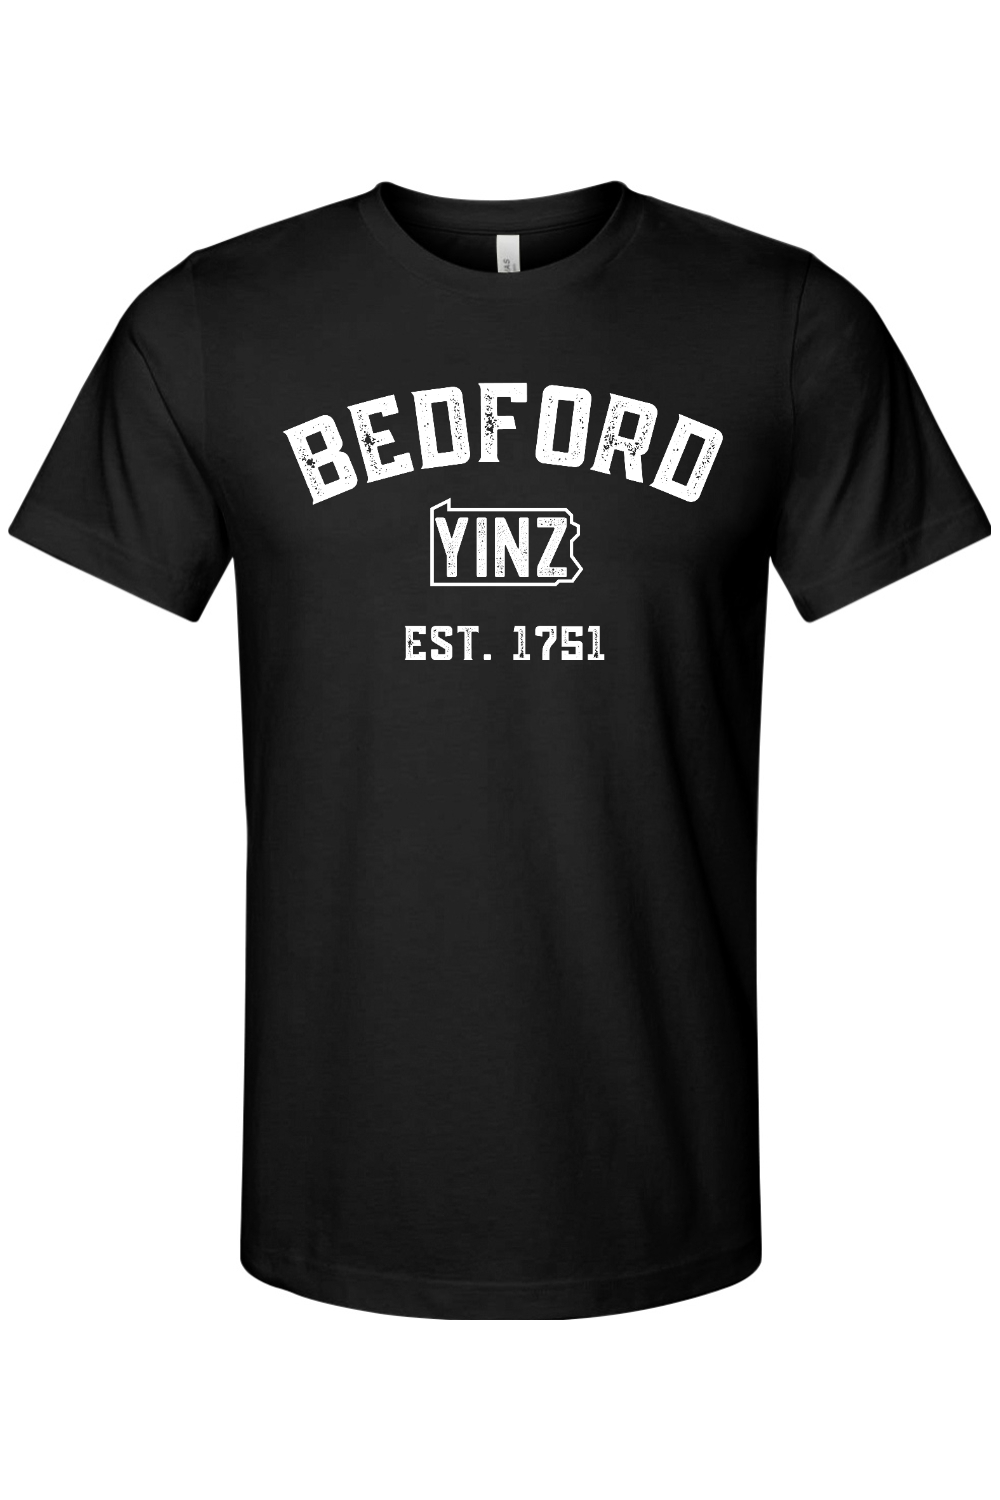 Bedford Yinzylvania - Yinzylvania